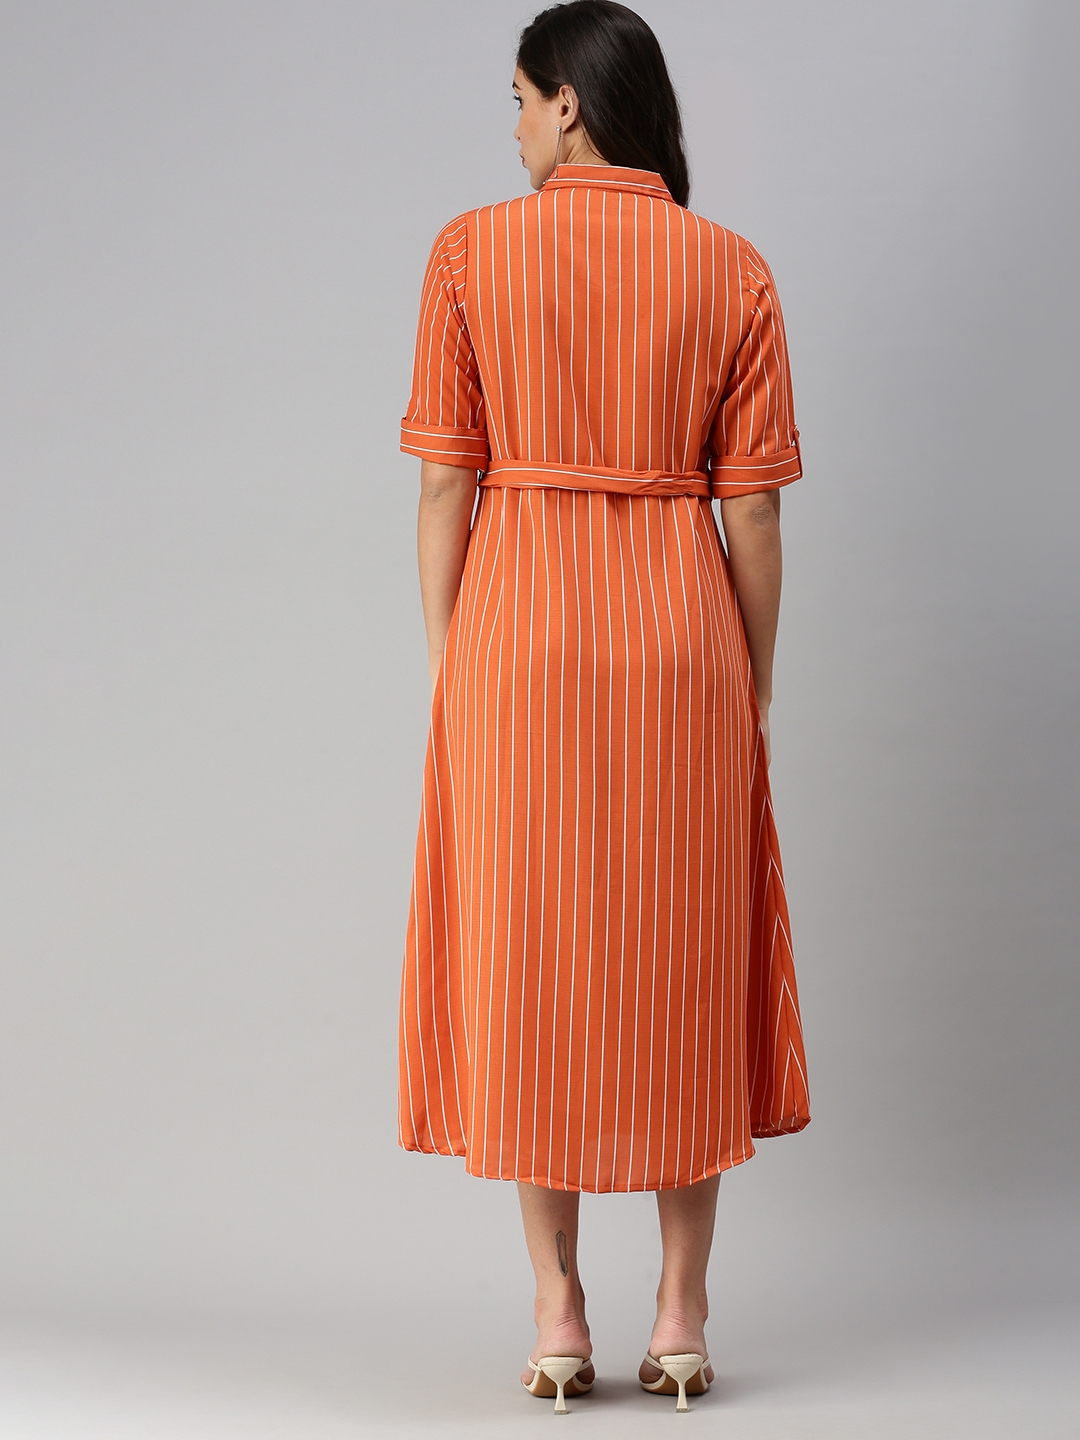 Women's Orange Viscose Striped Dresses